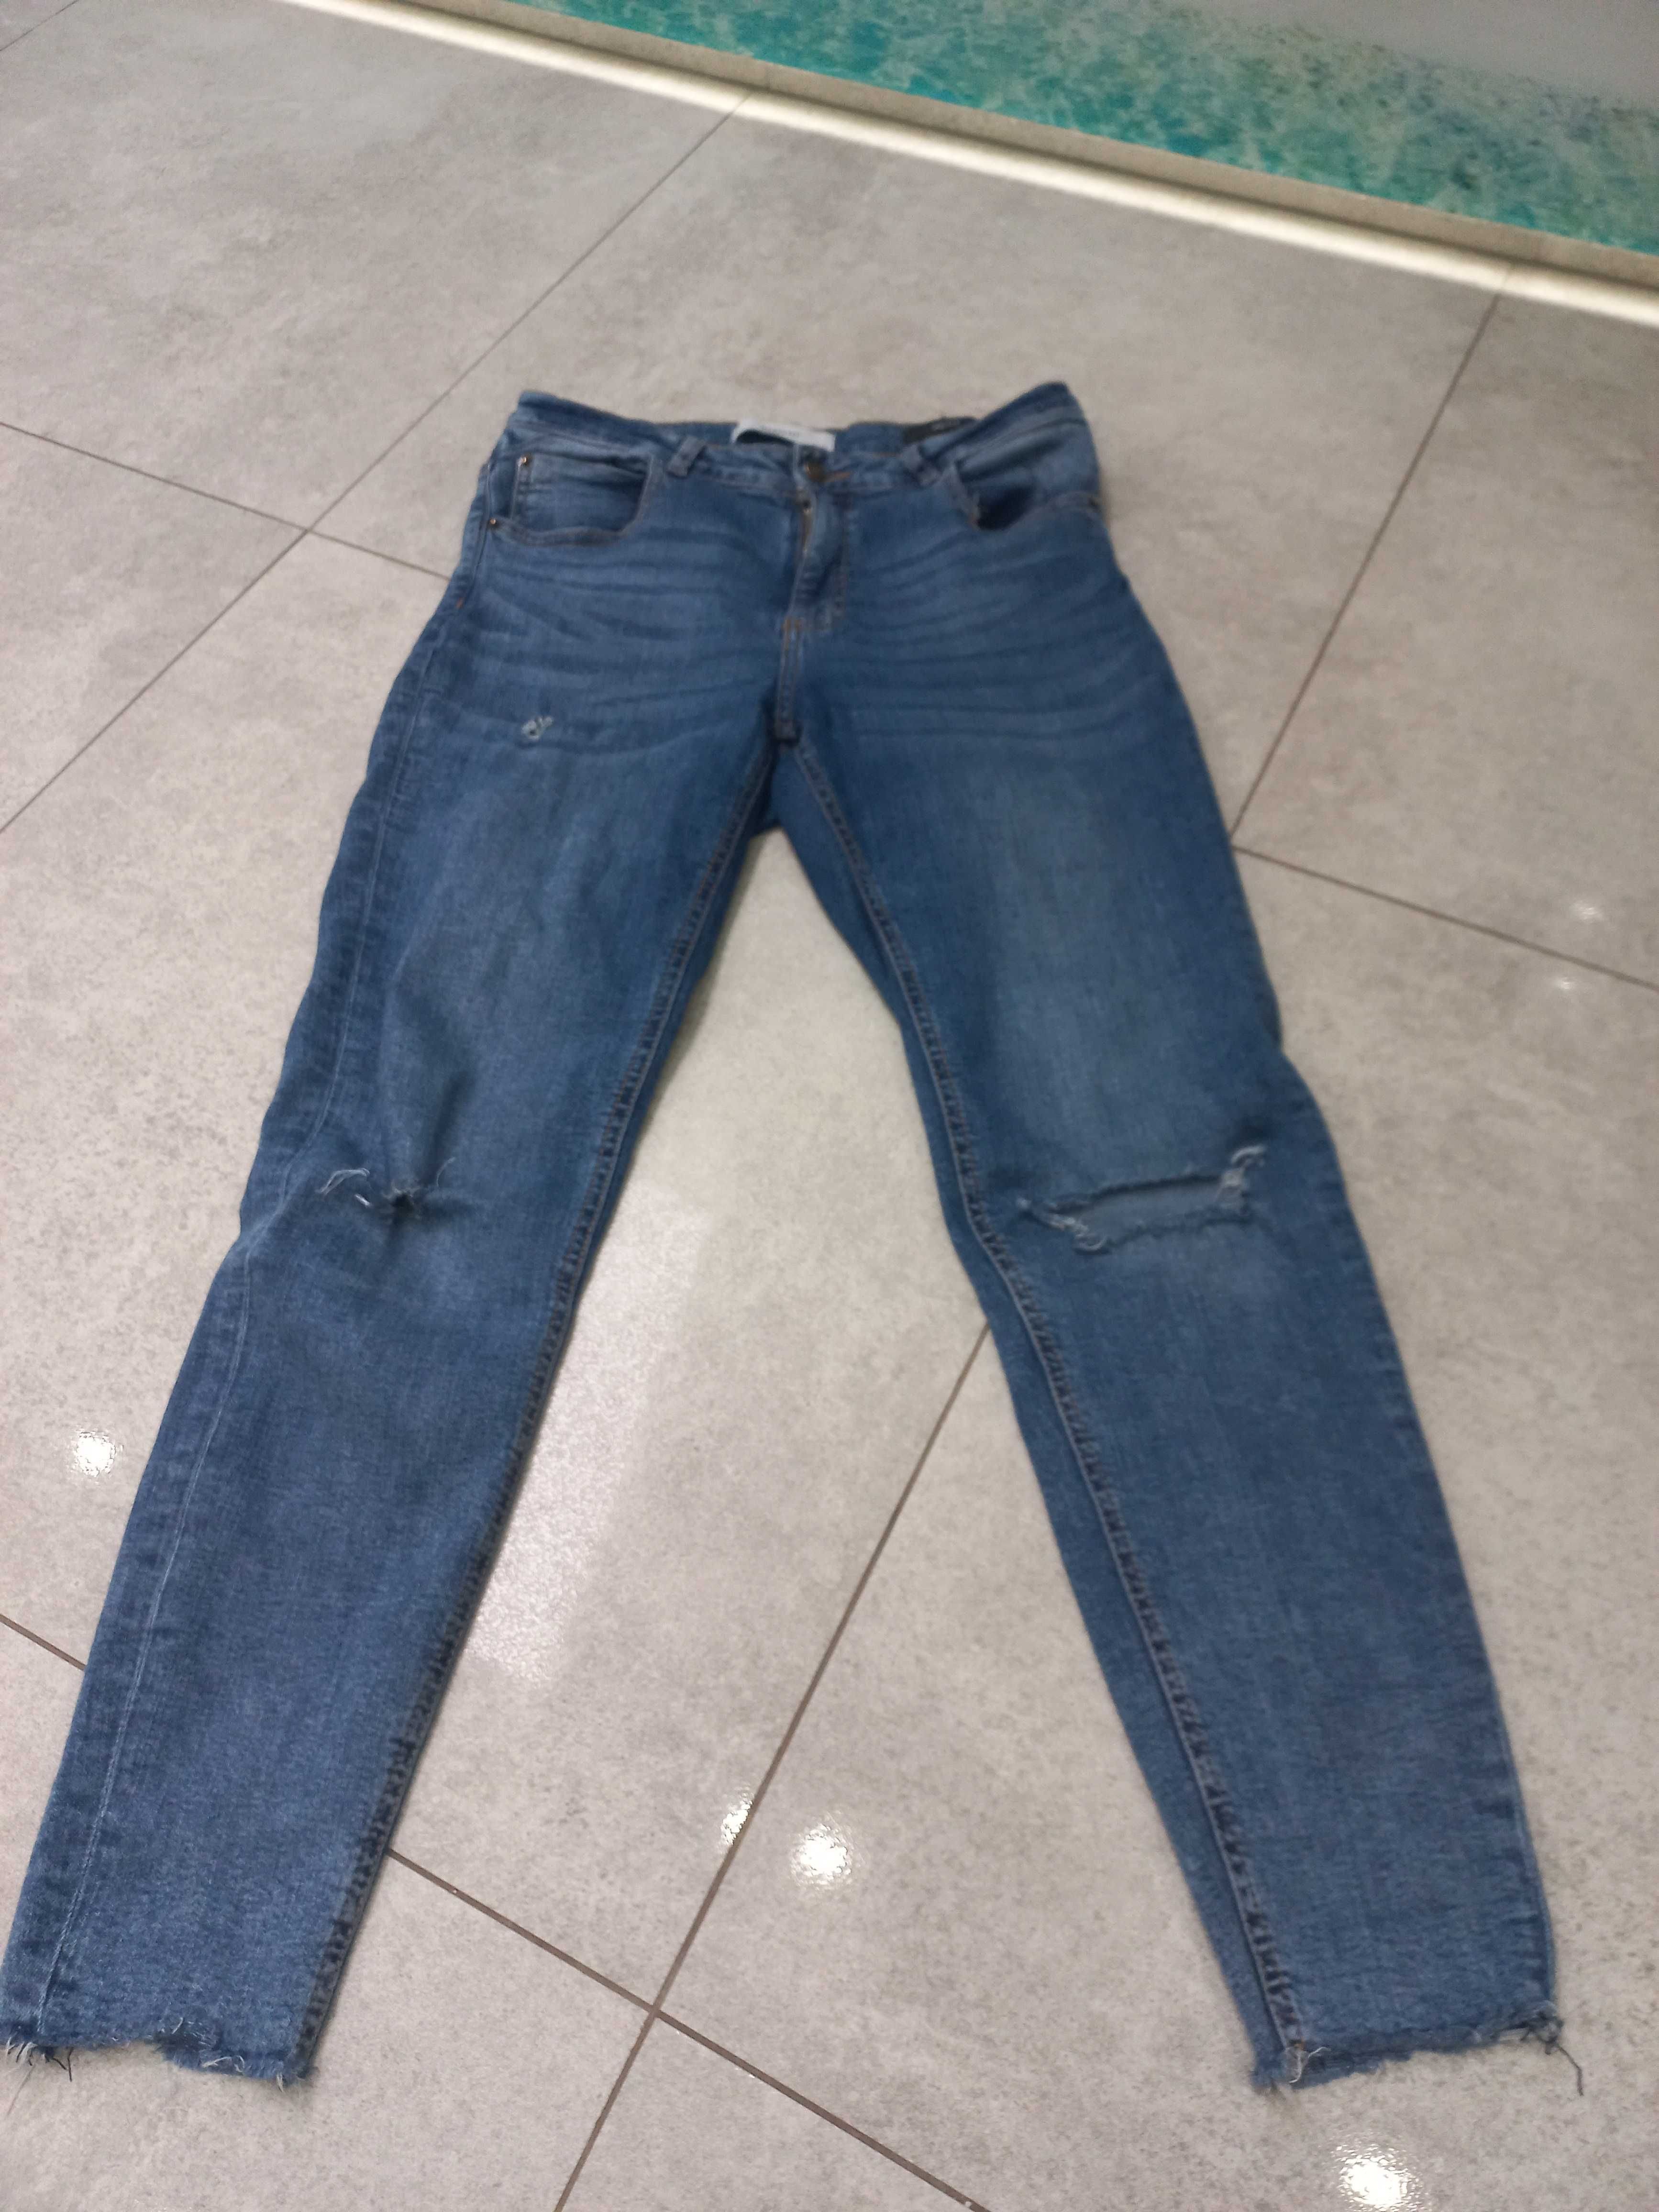 Spodnie jeansowebdamskien38 reserved